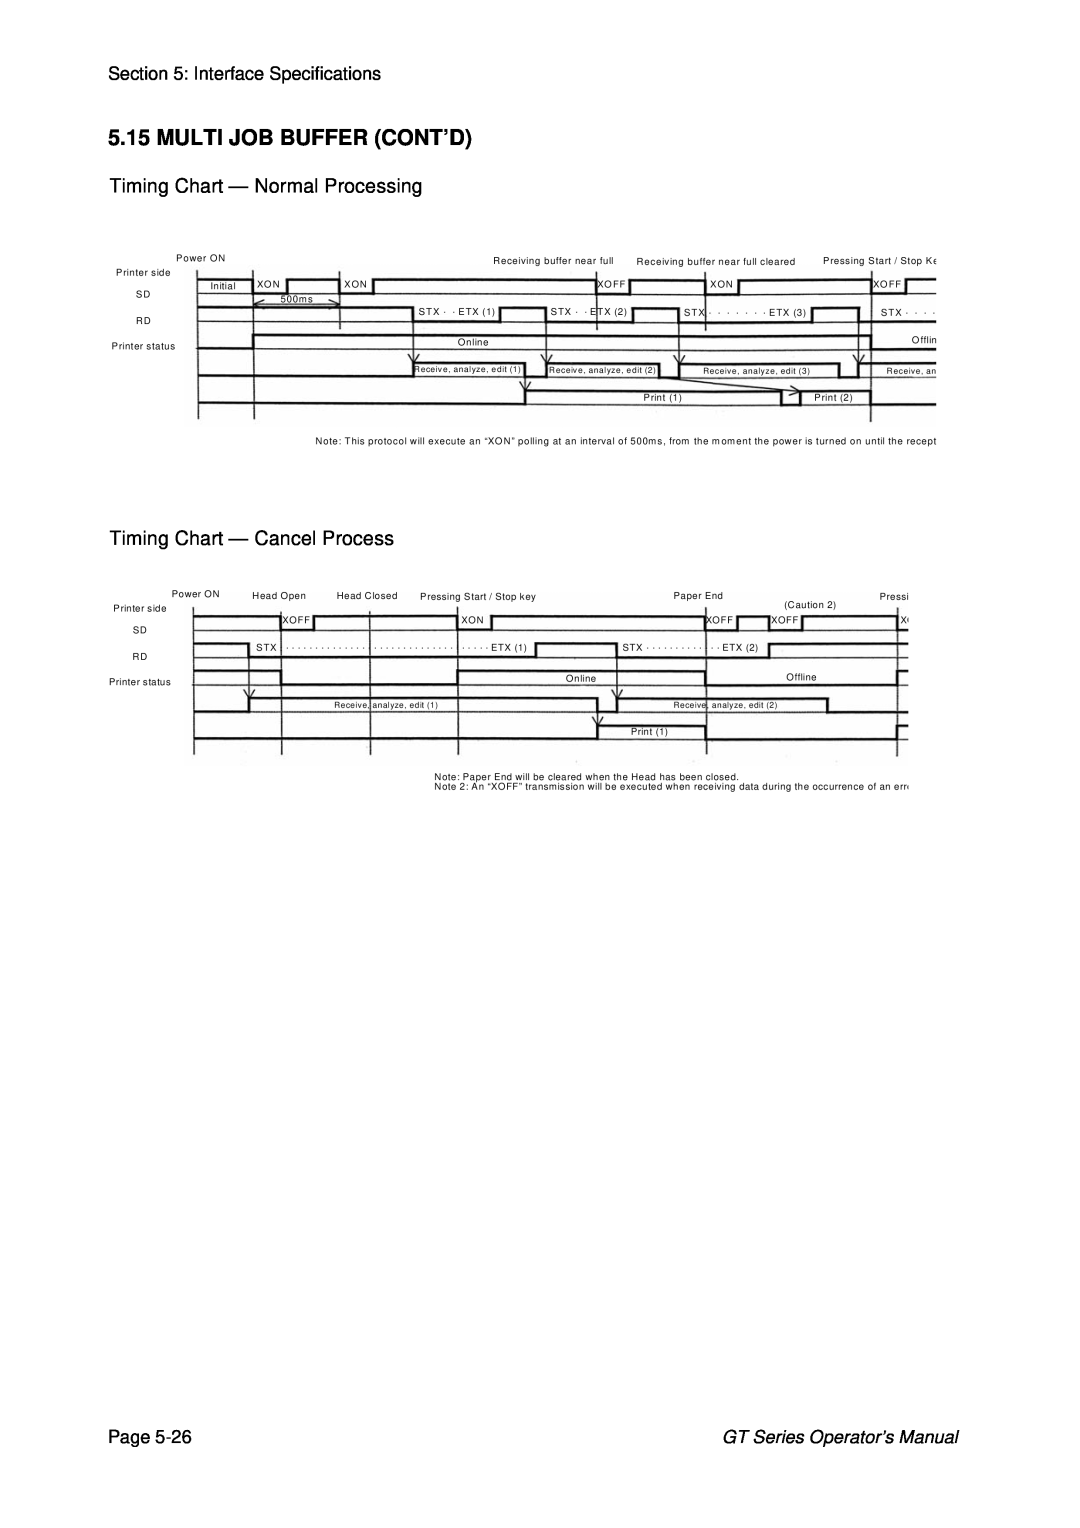 SATO GT424 manual Multi Job Buffer Cont’D, Timing Chart - Normal Processing, Timing Chart - Cancel Process 